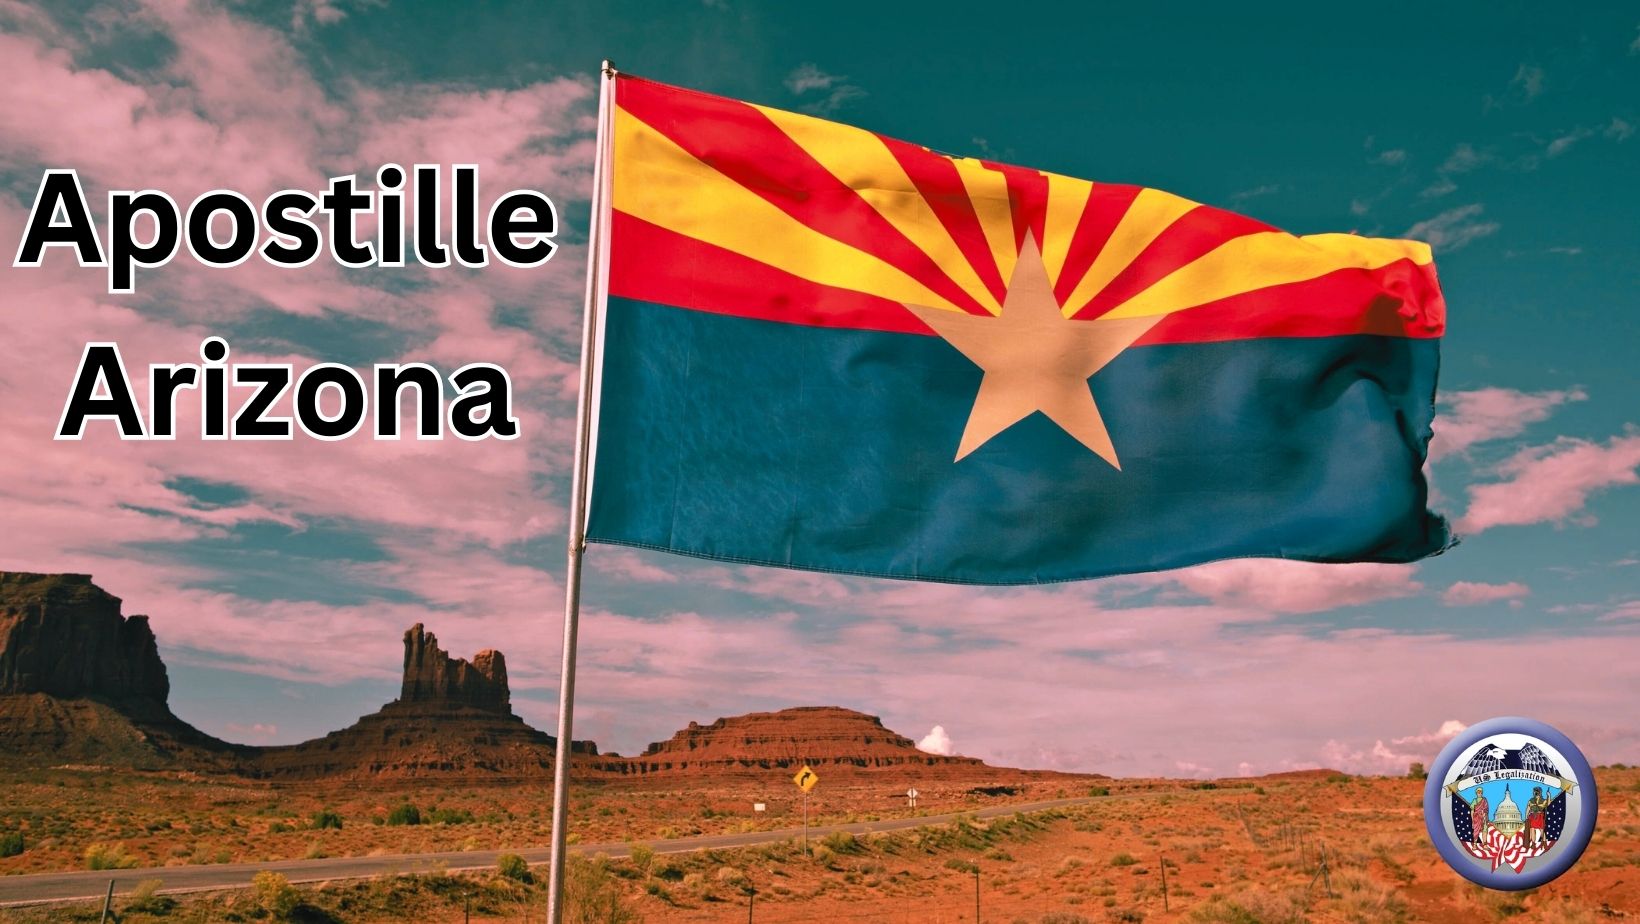 The Apostille in Arizona Diaries - Posting Trend